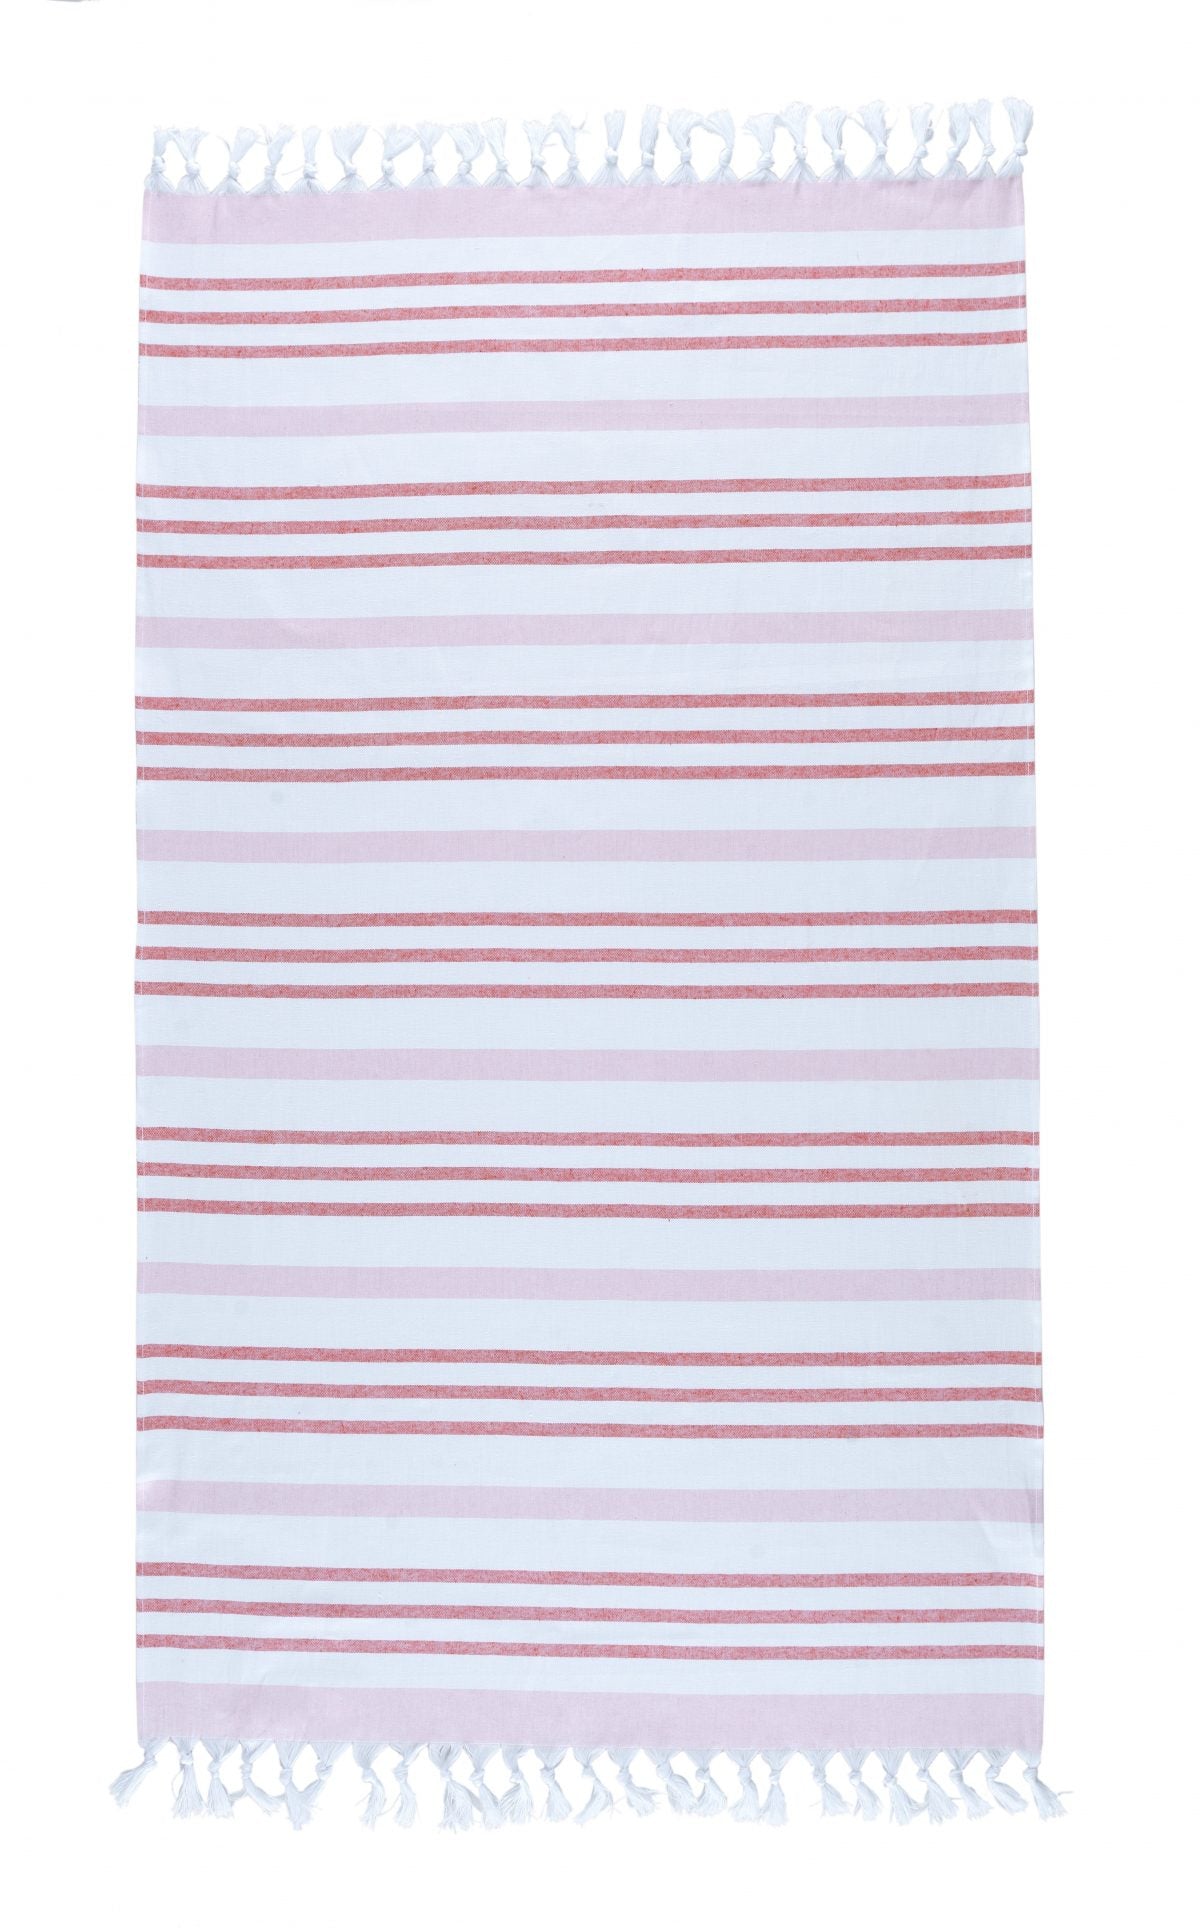 Darling Spring Coral Stripe Turkish Towel - Pink